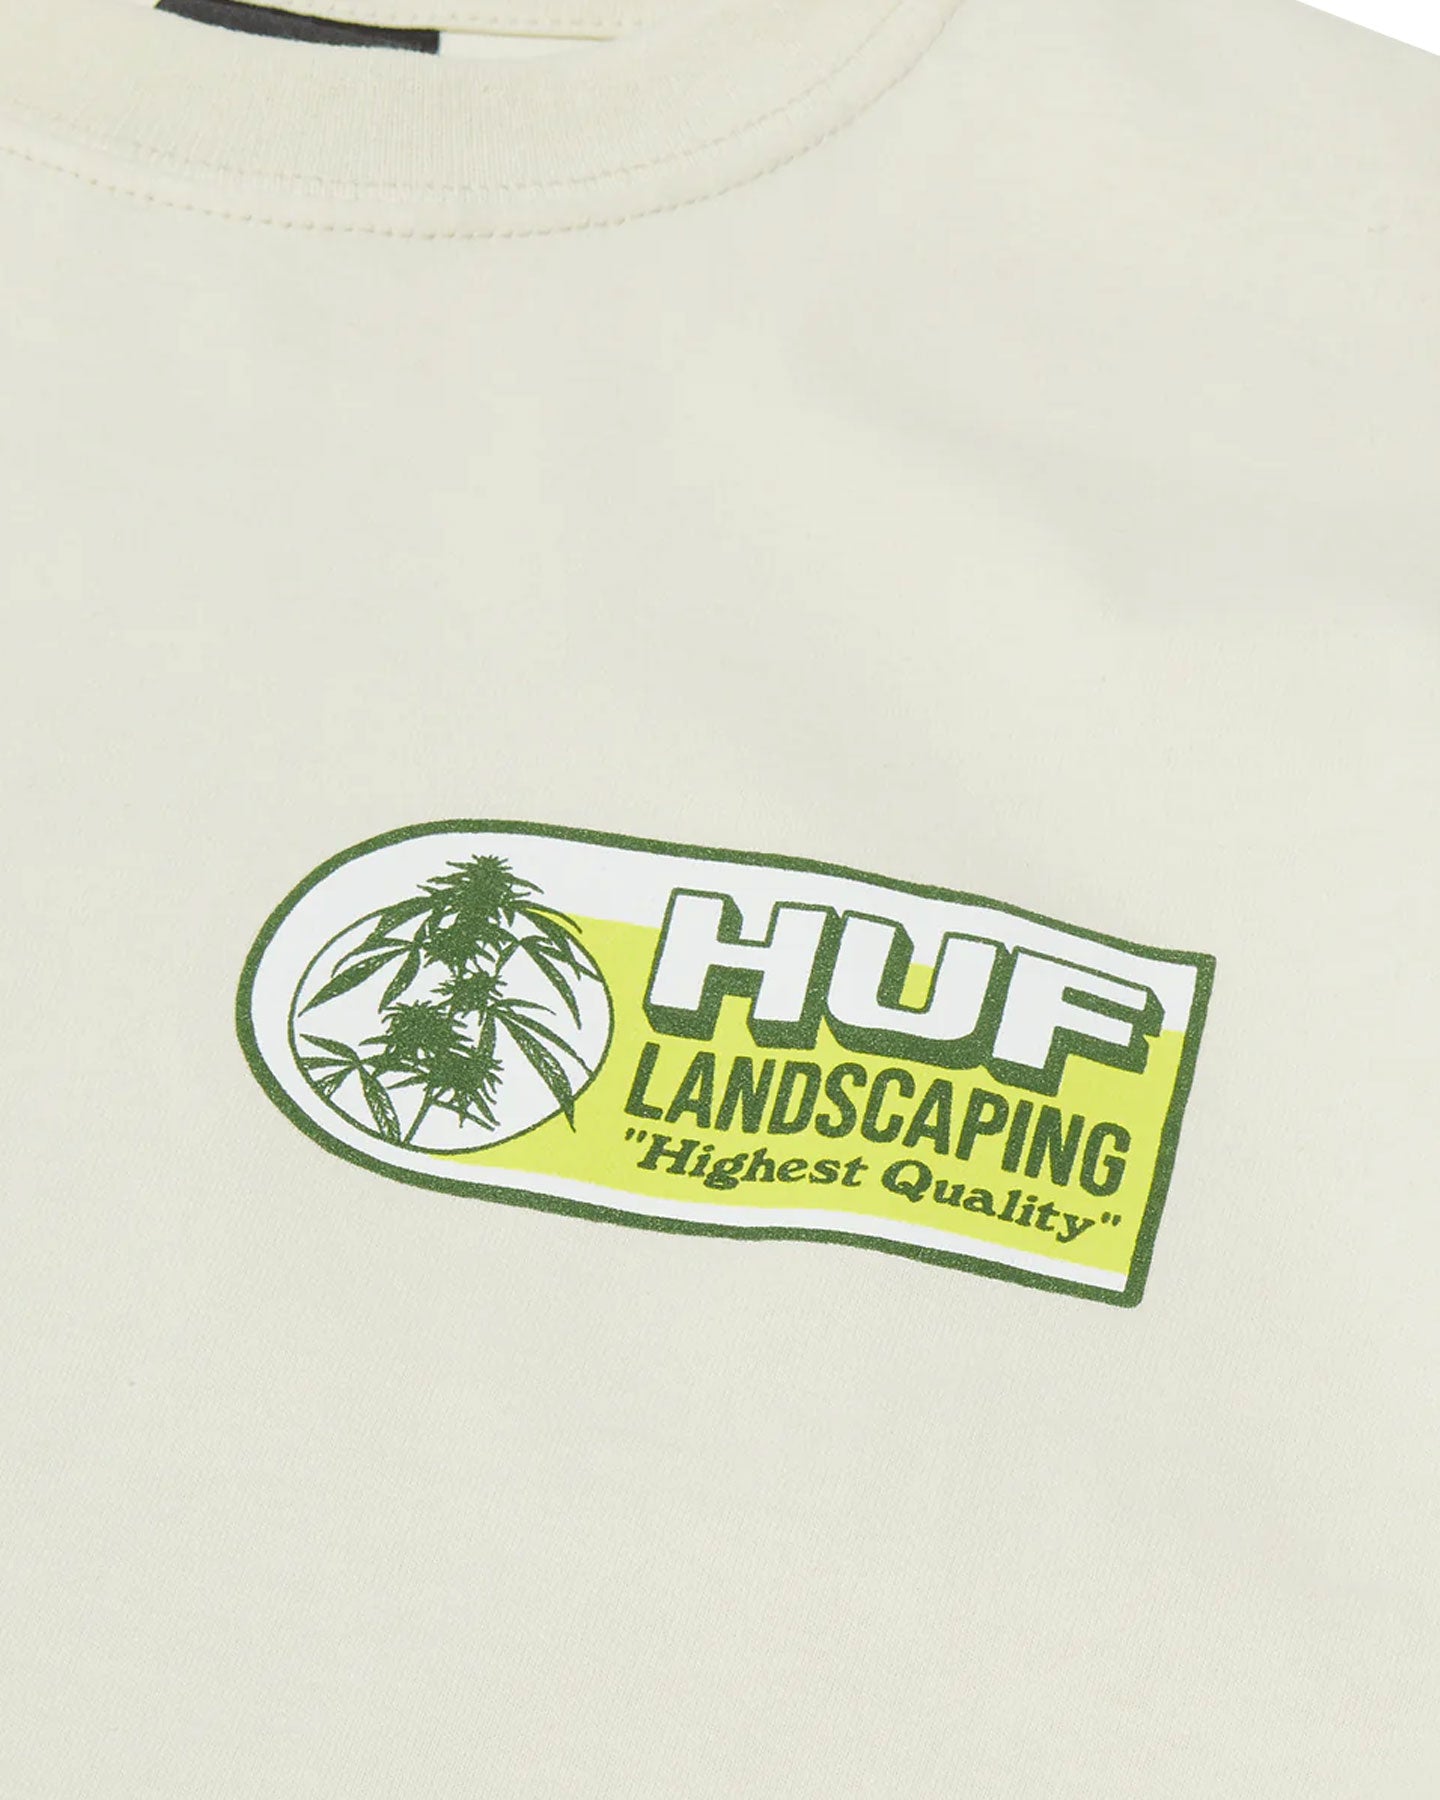 HUF Landscaping SS Tee - Bone